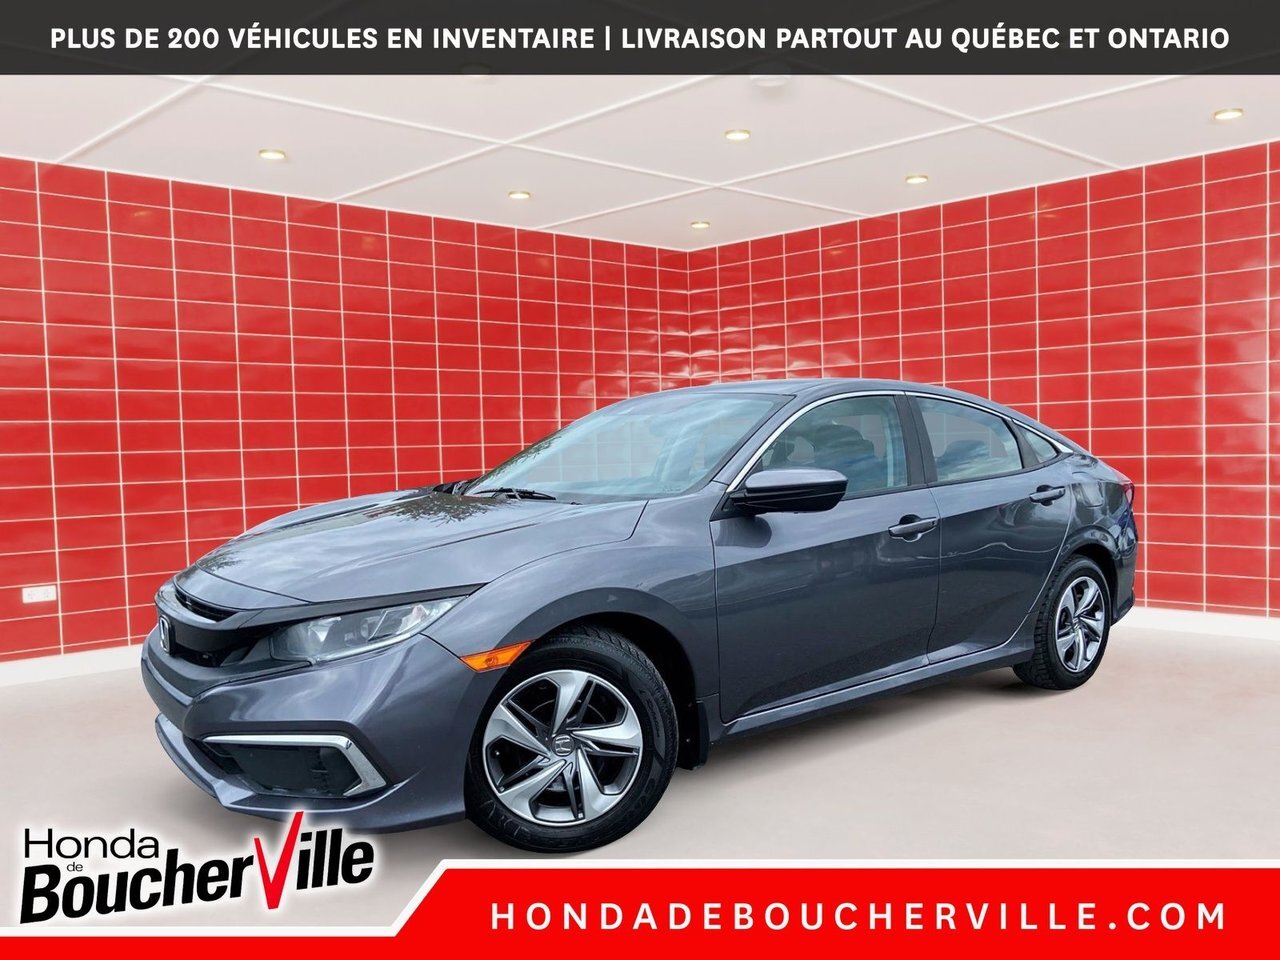 2019 Honda Civic Sedan LX MANUELLE 6 VITESSES, AIR, CARPLAY ET ANDROID